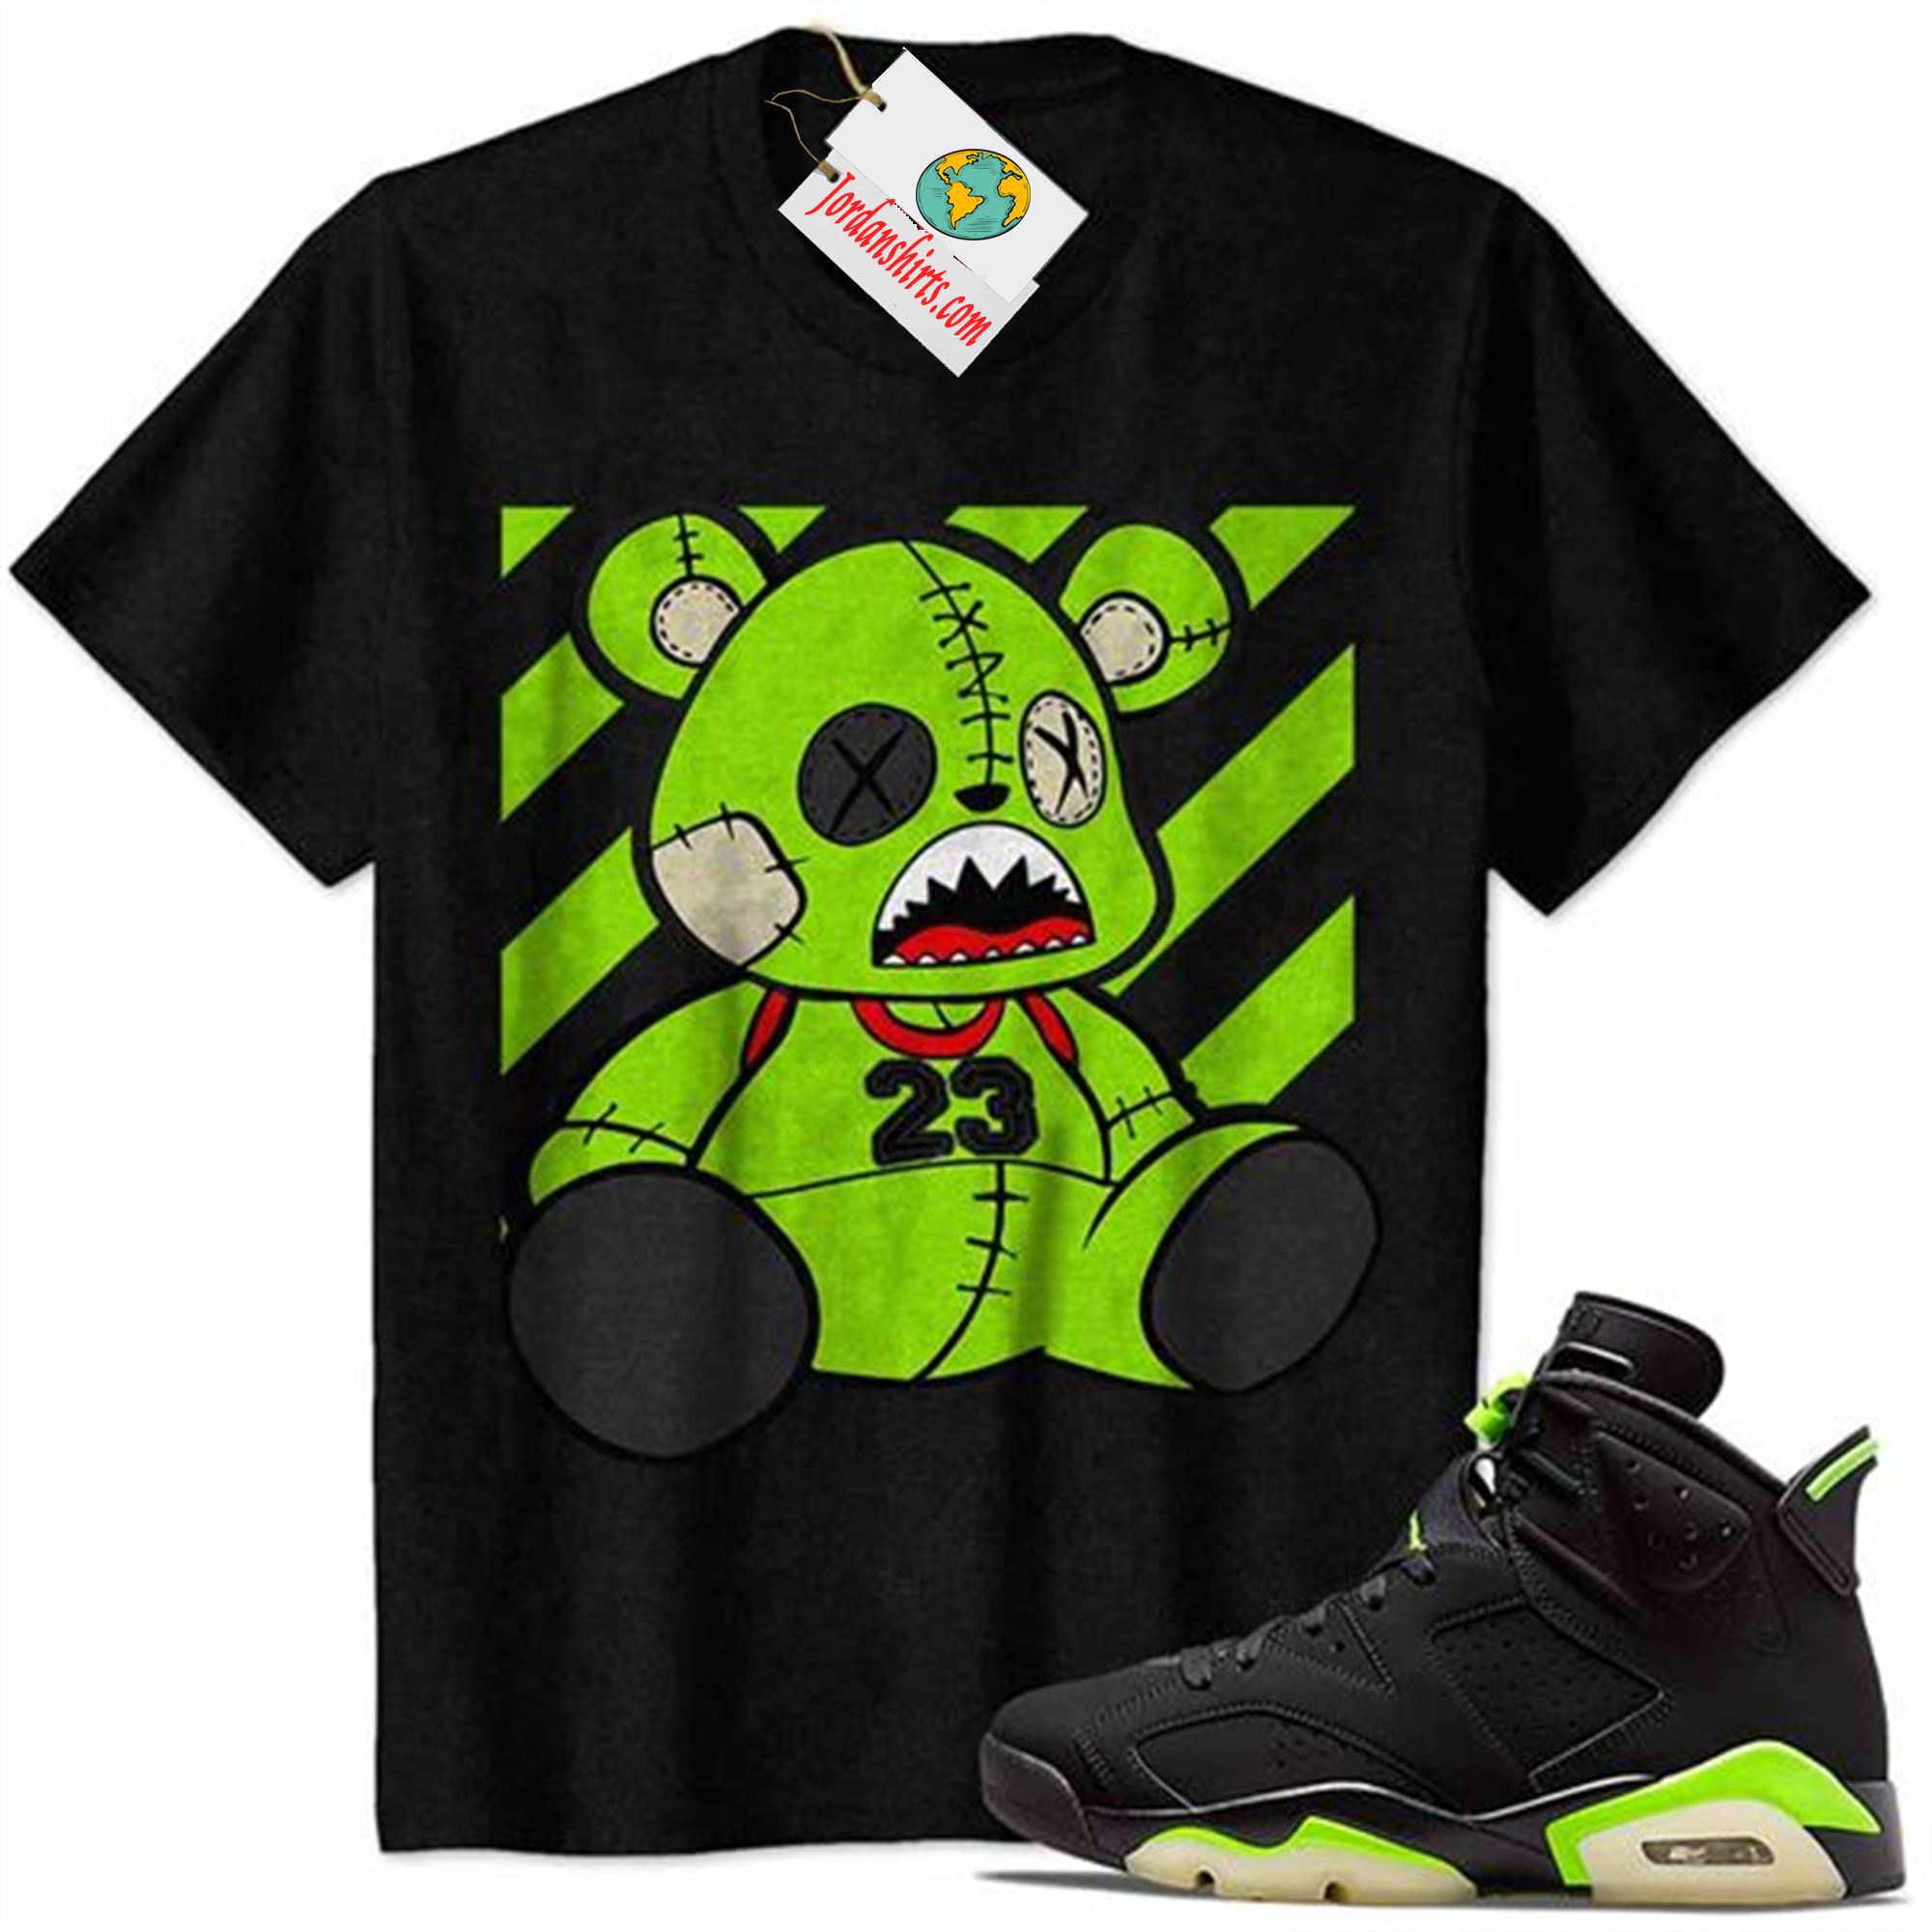 Jordan 6 Shirt, 23 Teddy Black Air Jordan 6 Electric Green 6s Size Up To 5xl